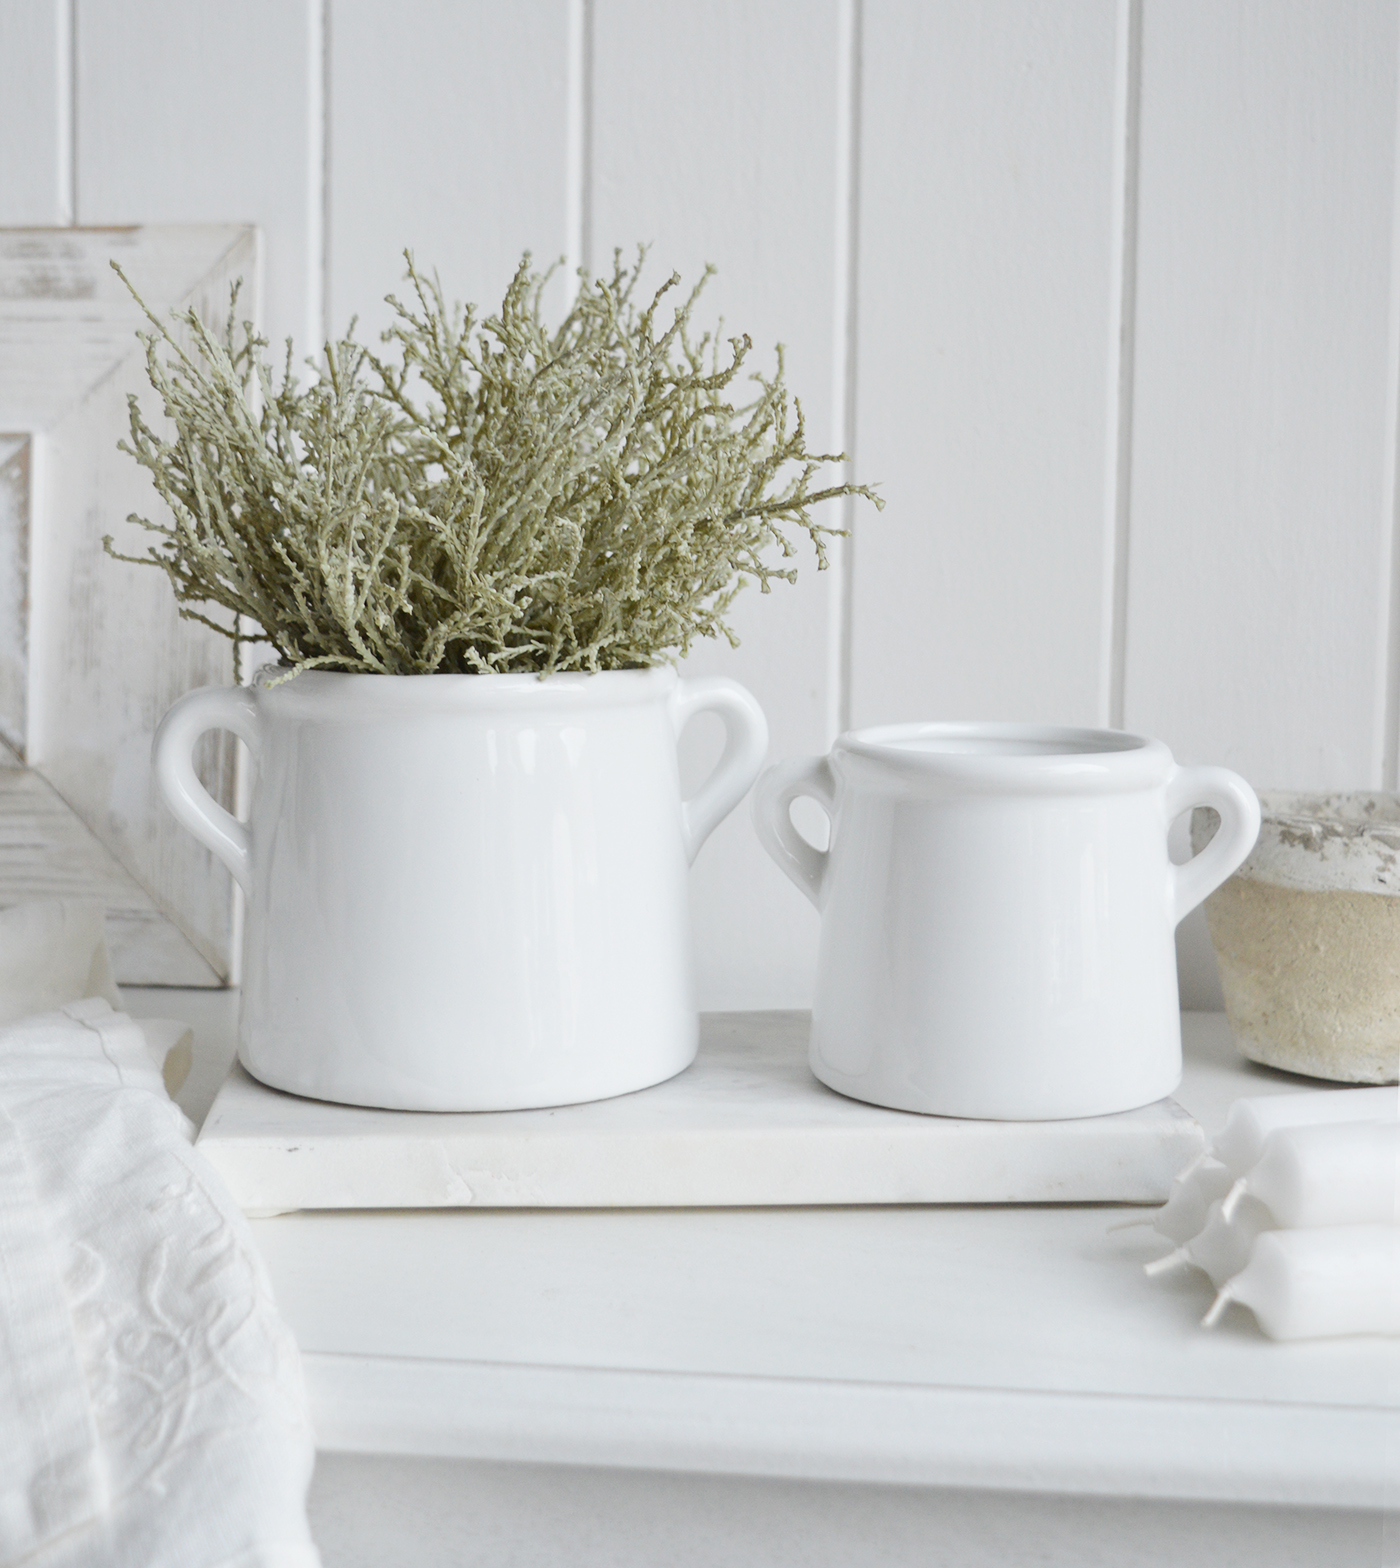 Castine White Ceramic Pots - White Interiors and Home Decor for modern farmhouse homes